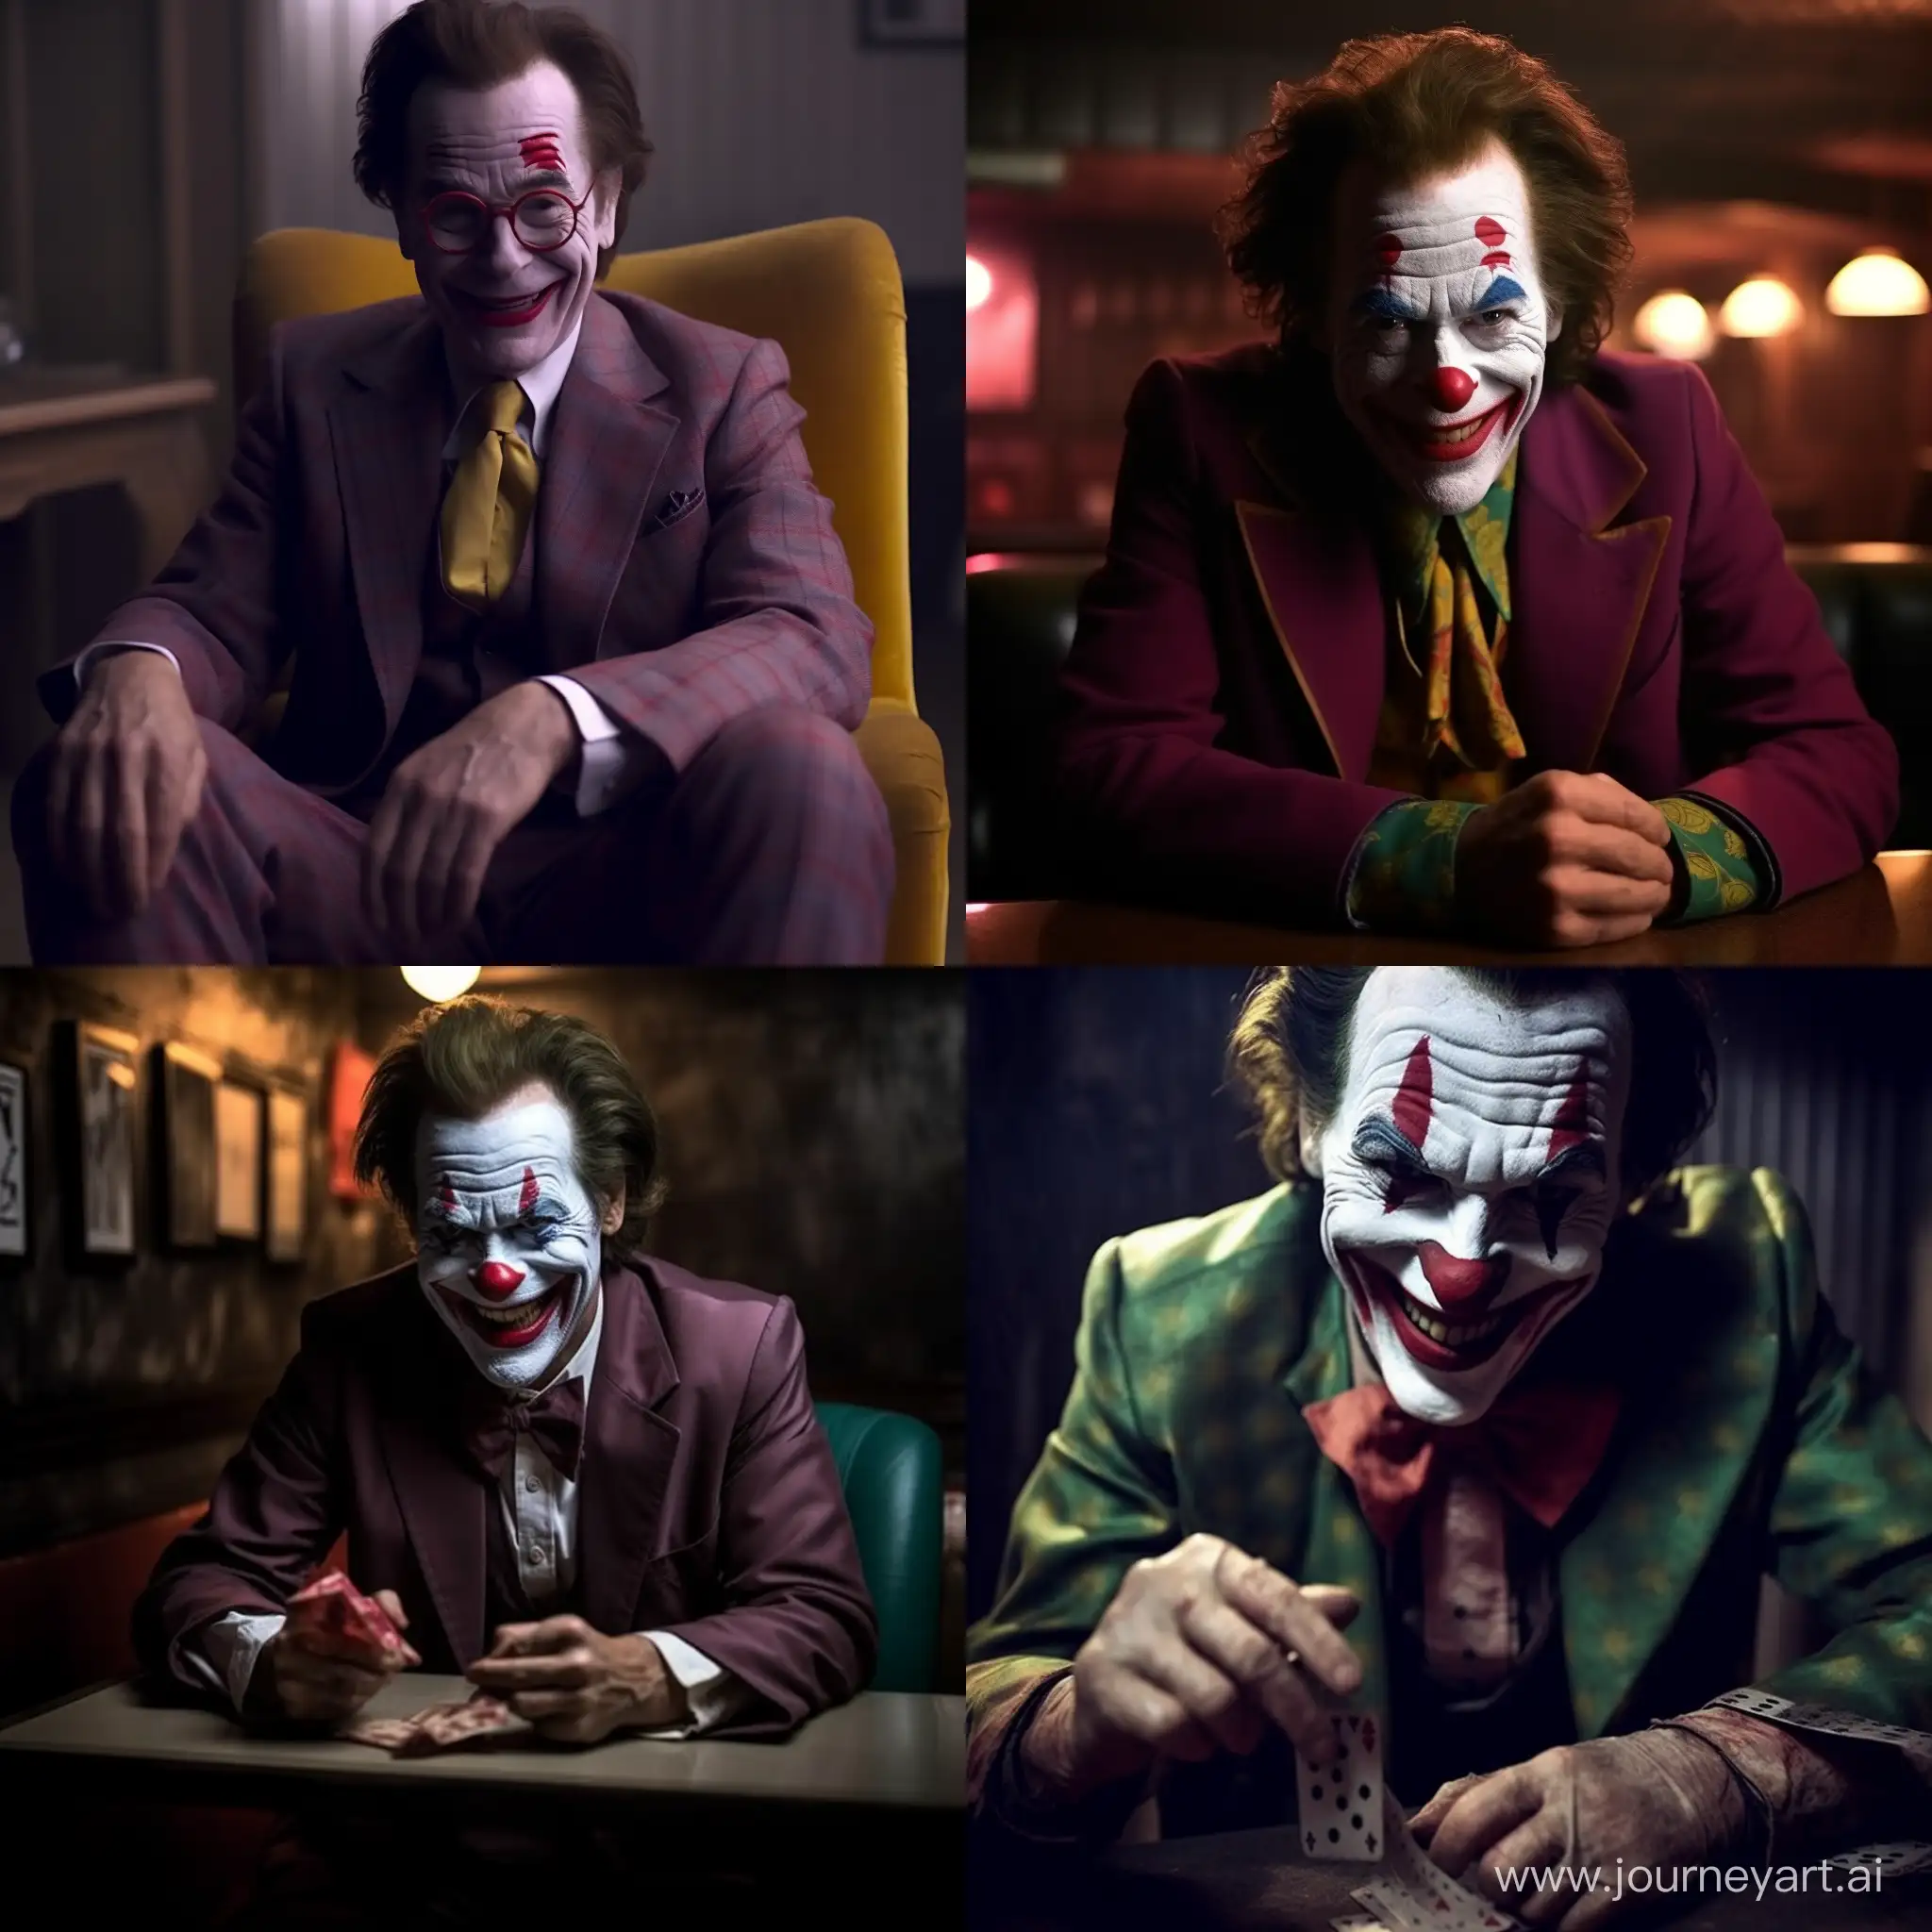 Bryan-Cranston-Transforms-into-Joker-Villain-in-Aesthetic-Old-Film-Scene